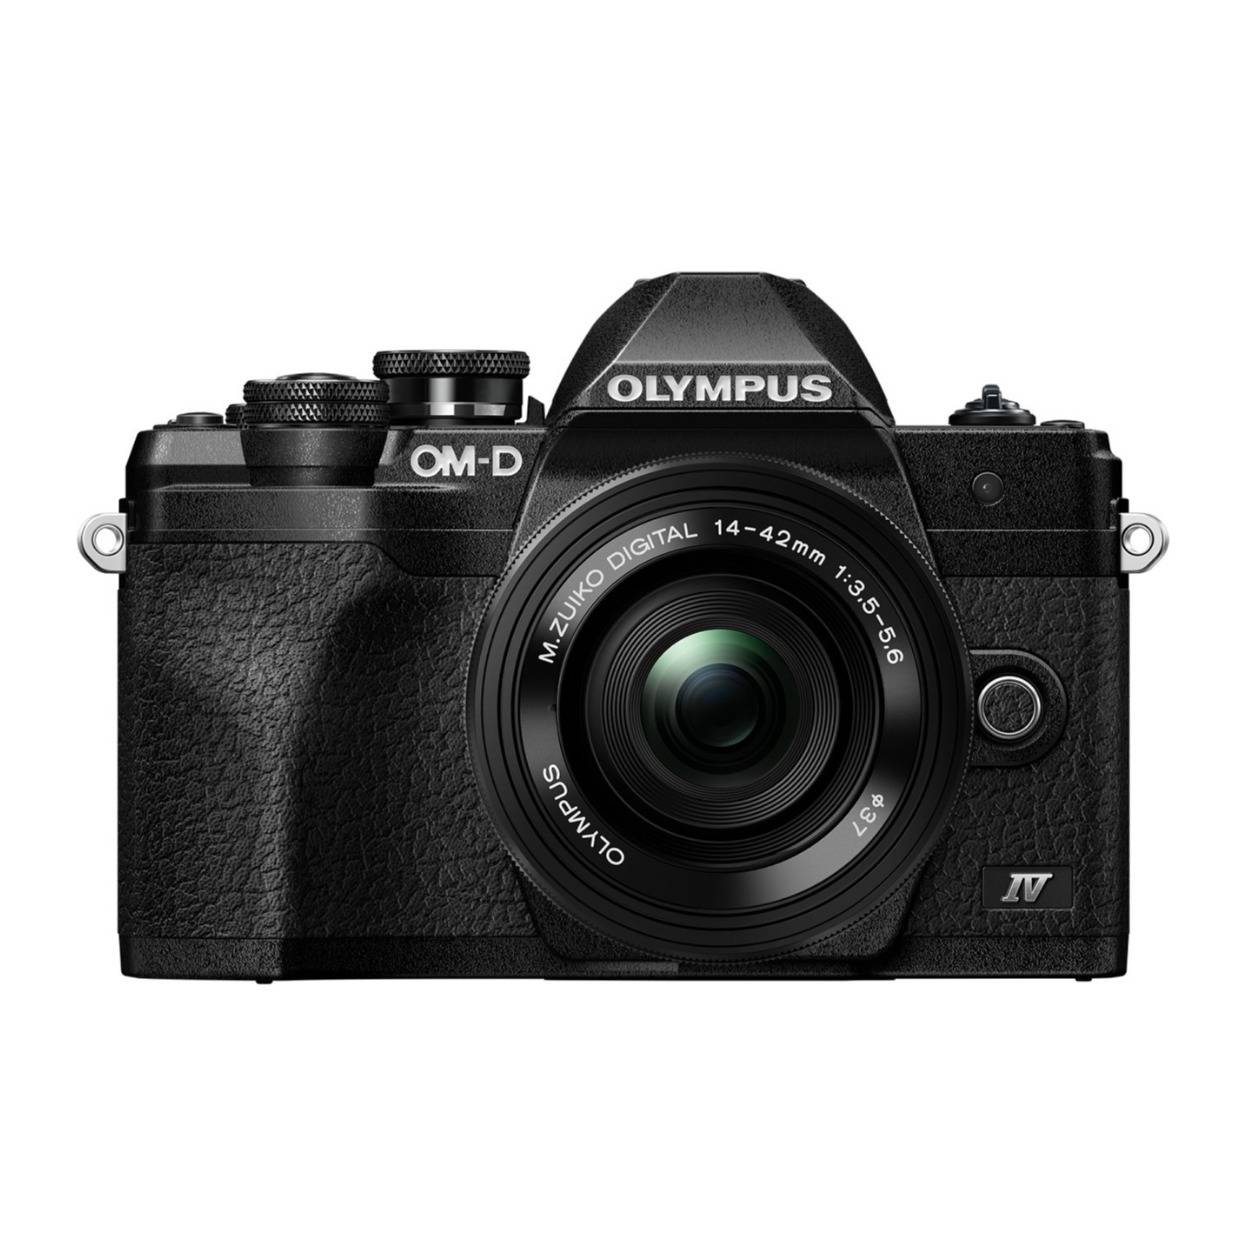 Olympus OM-D E-M10 Mark IV Camera (Black) and M.Zuiko Digital ED 14-42mm f/3.5-5.6 EZ Lens Kit